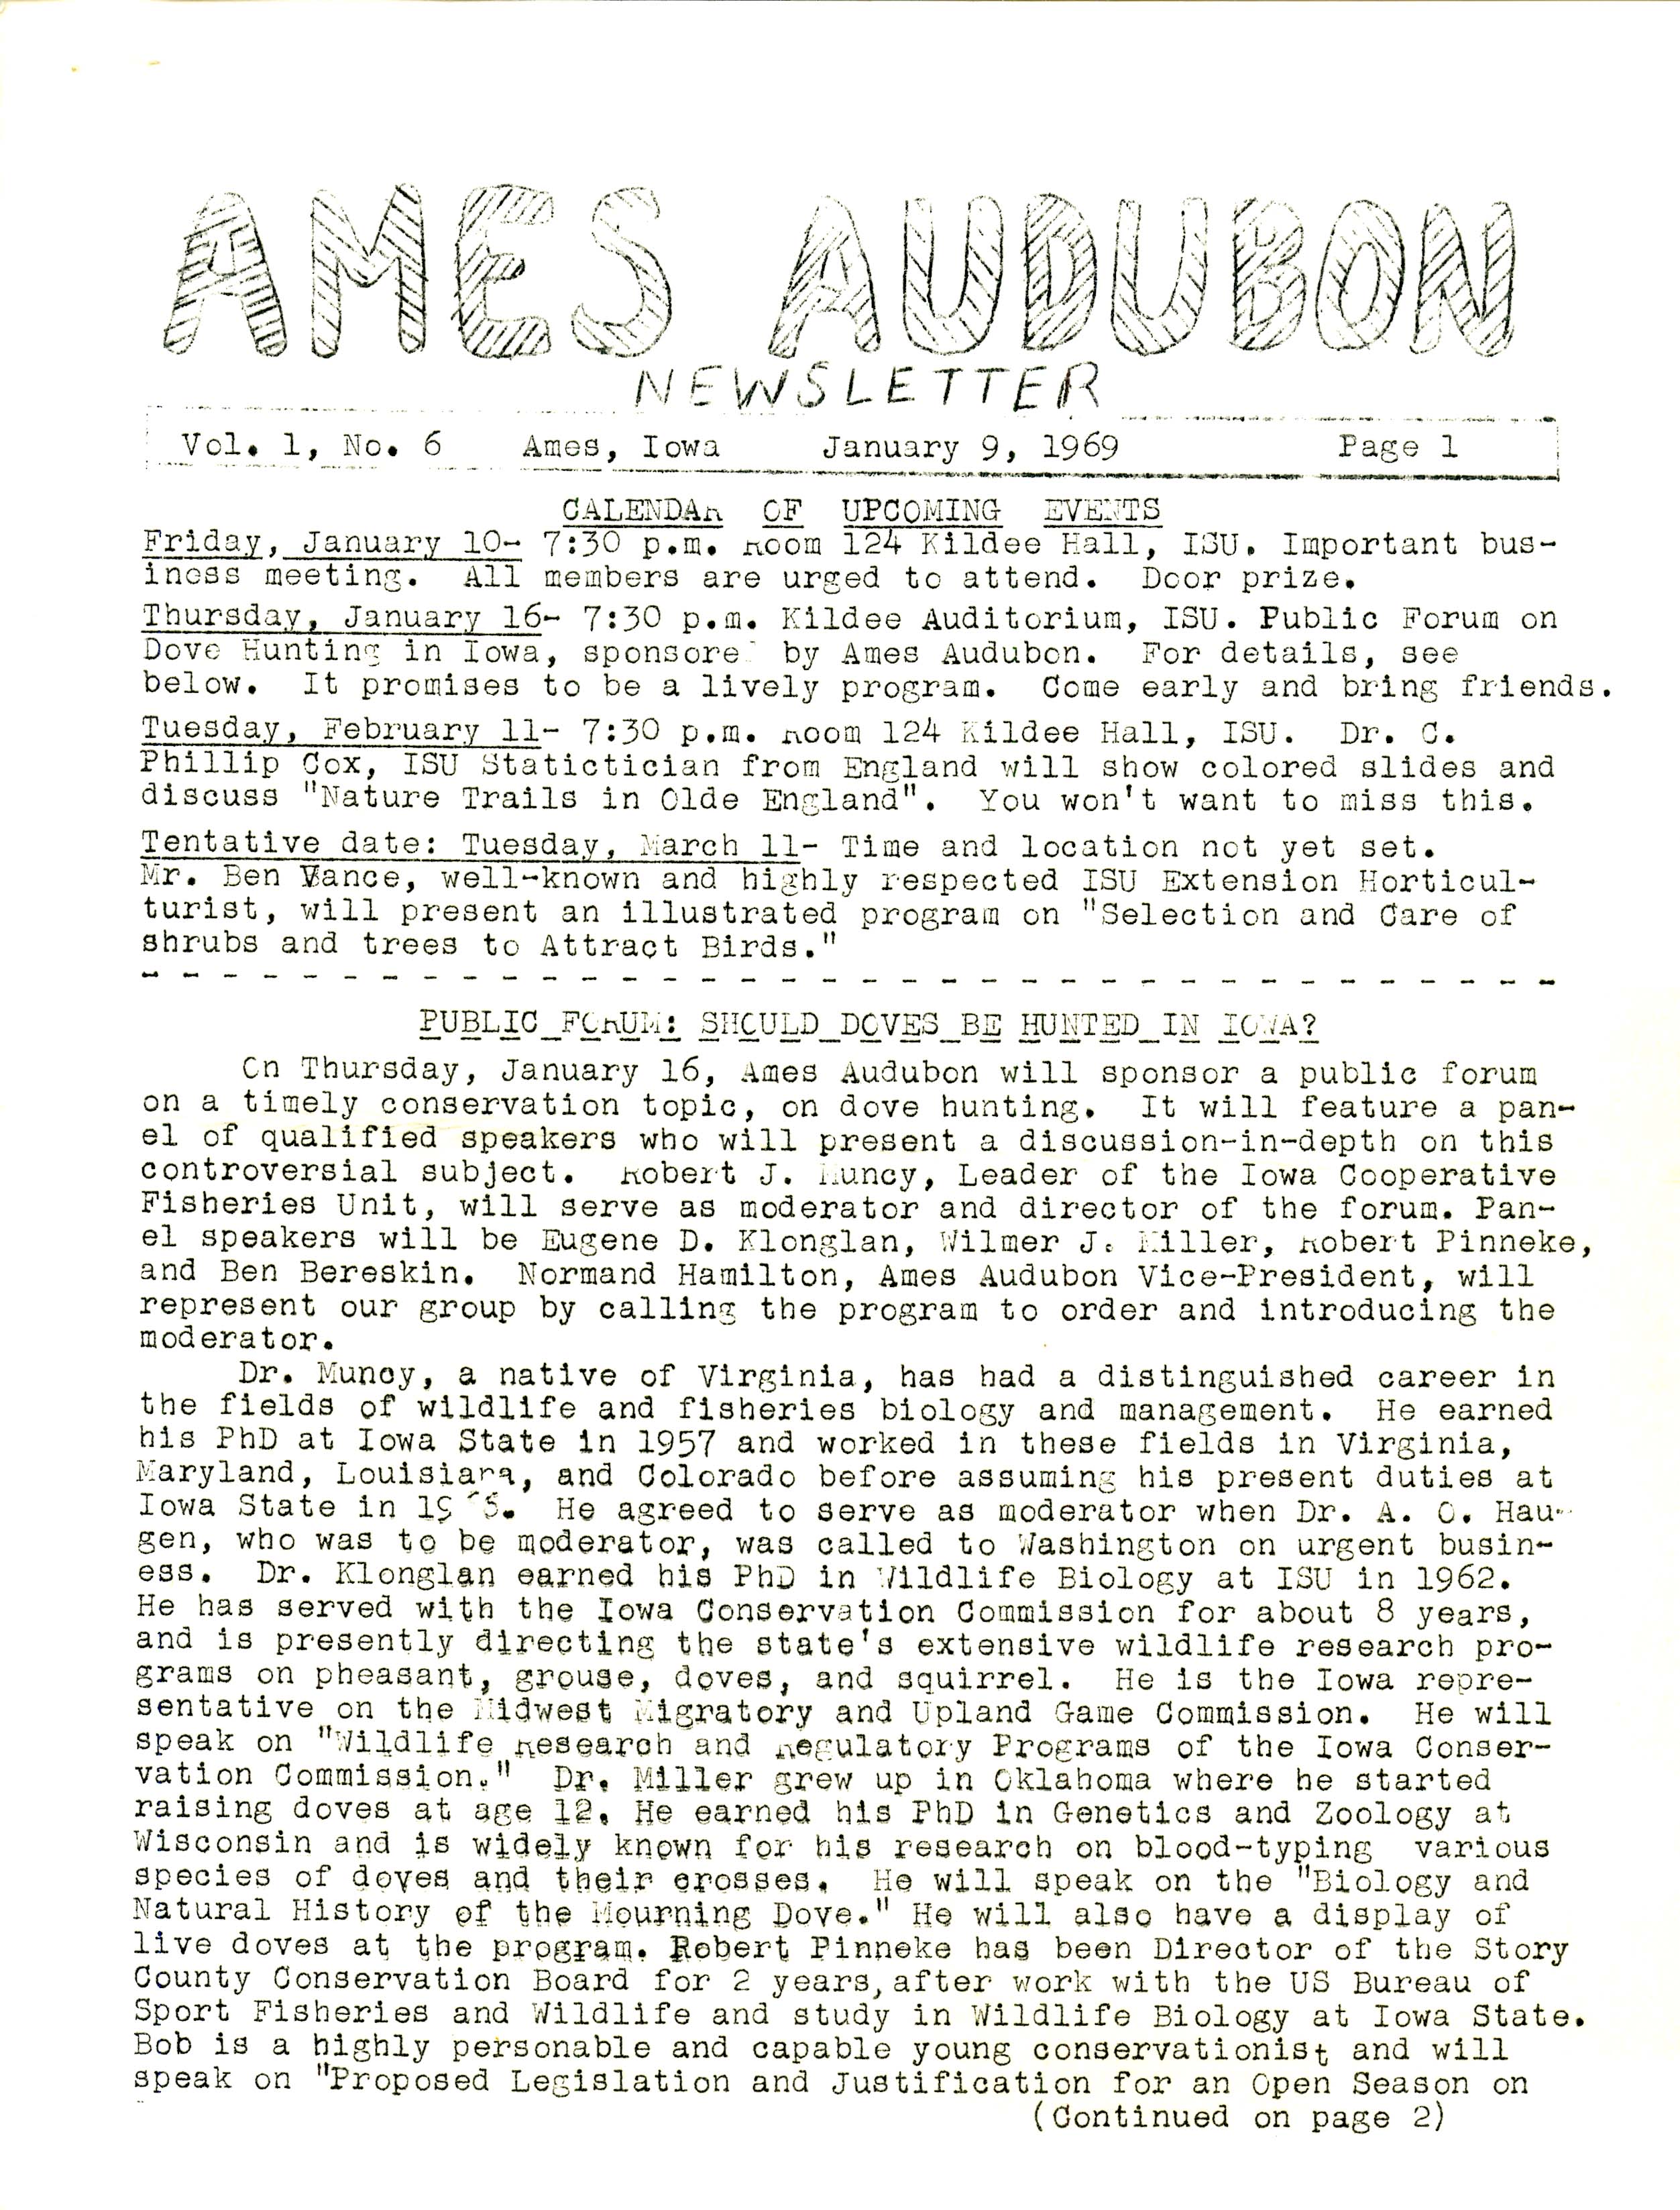 Ames Audubon Newsletter, Volume 1, Number 6, January 9, 1969